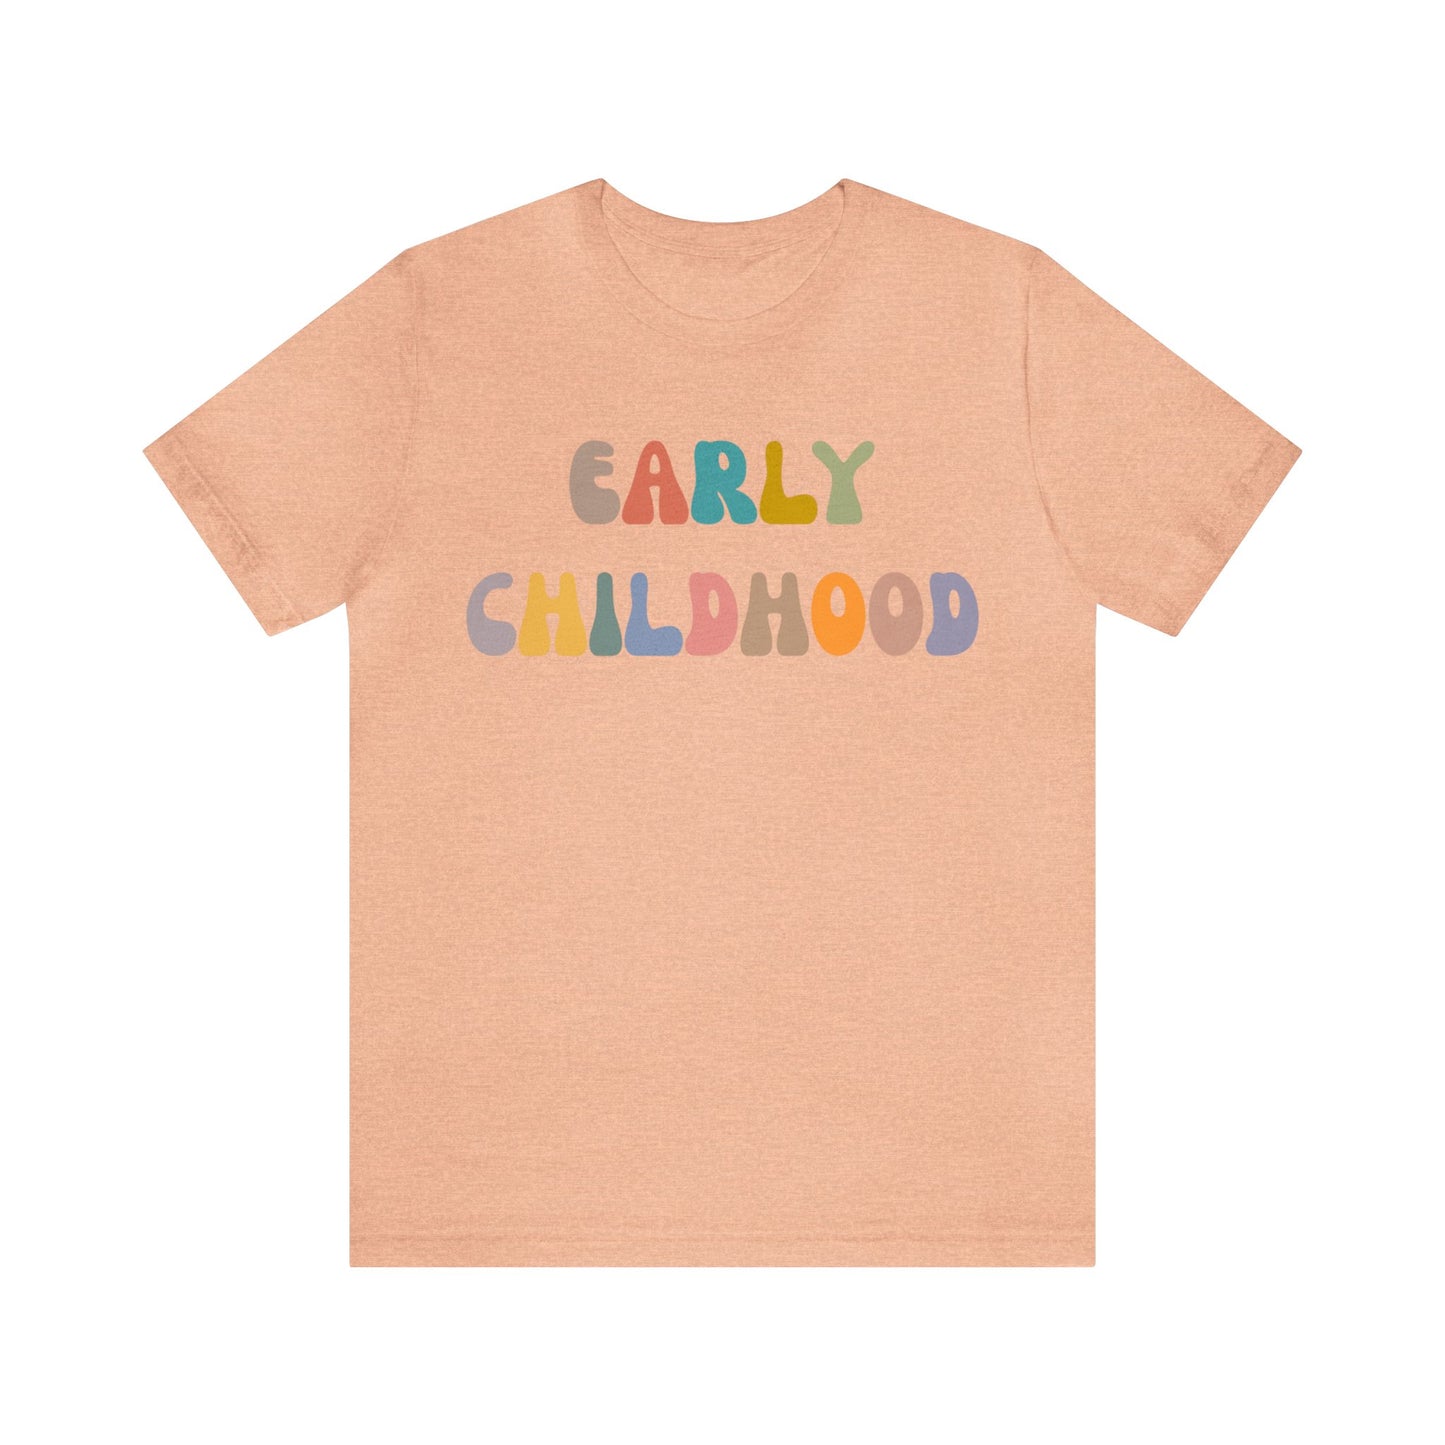 Early Childhood Educator Shirt, Back To School Shirt, Preschool Teacher Shirt, Preschool Shirt, First Day of School Shirt, T1280